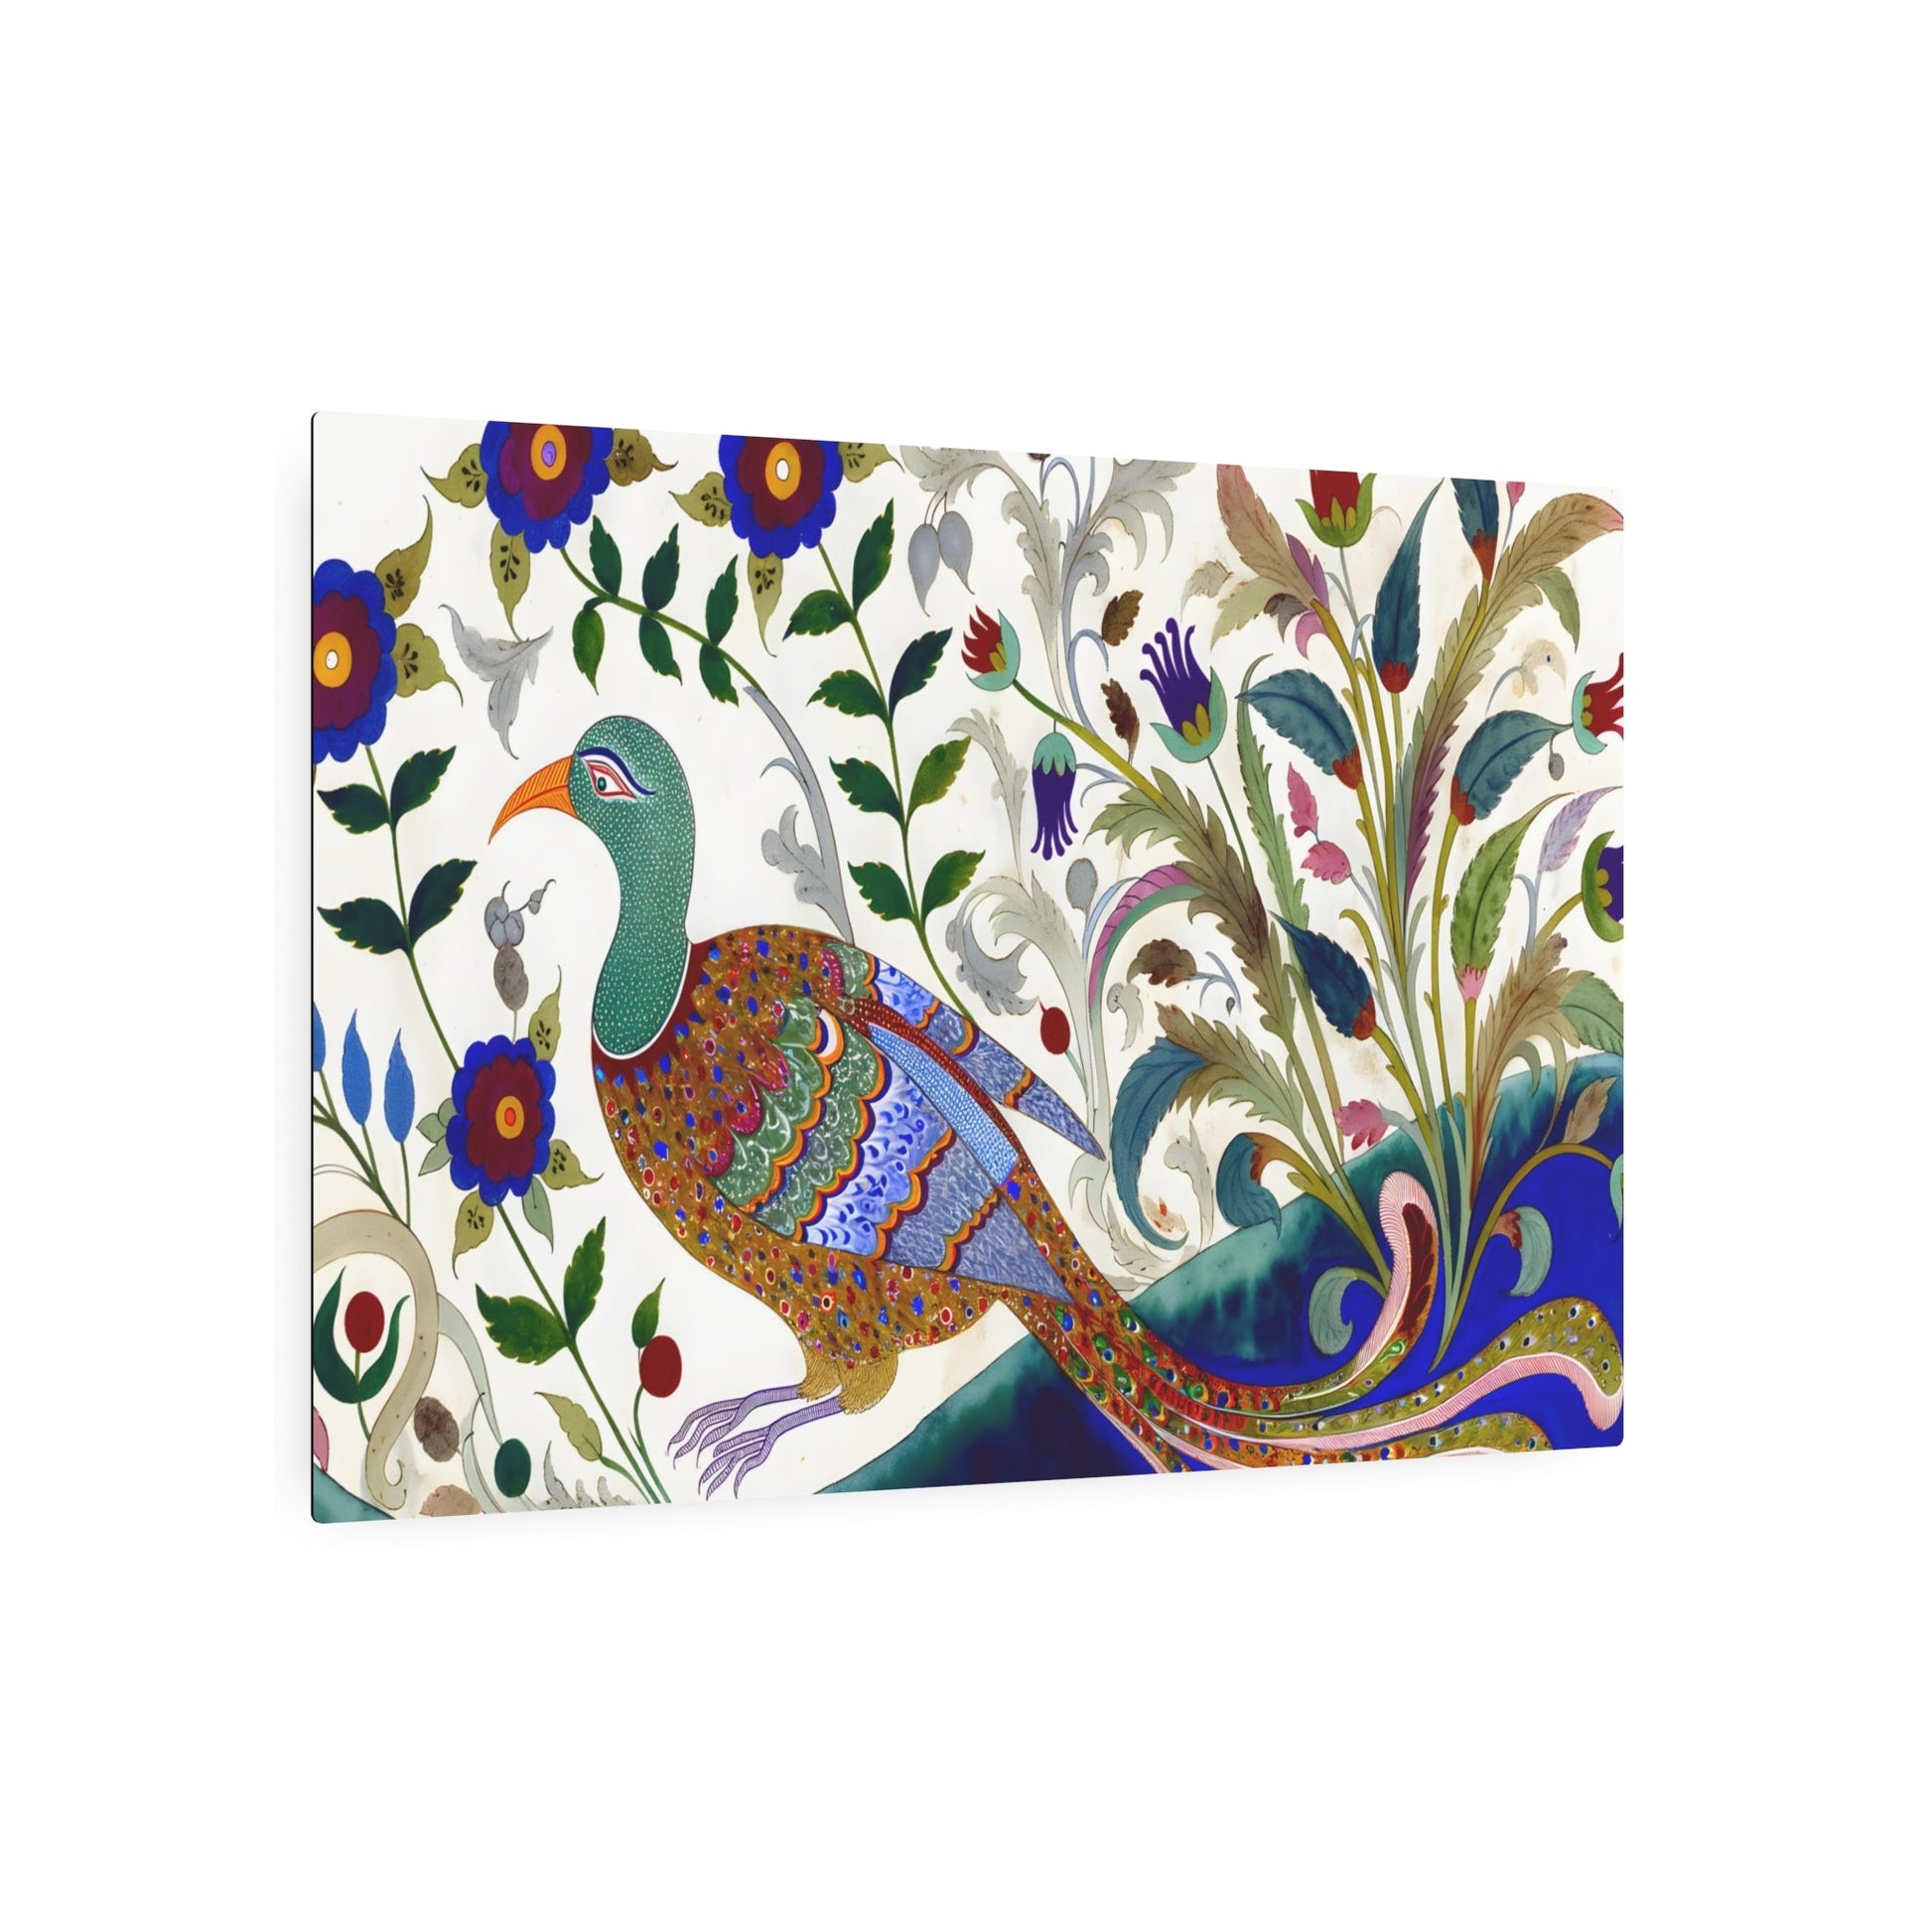 Metal Poster Art | "Mughal Miniature South Asian Bird Artwork - Authentic Non-Western & Global Style Painting" - Metal Poster Art 36″ x 24″ (Horizontal) 0.12''